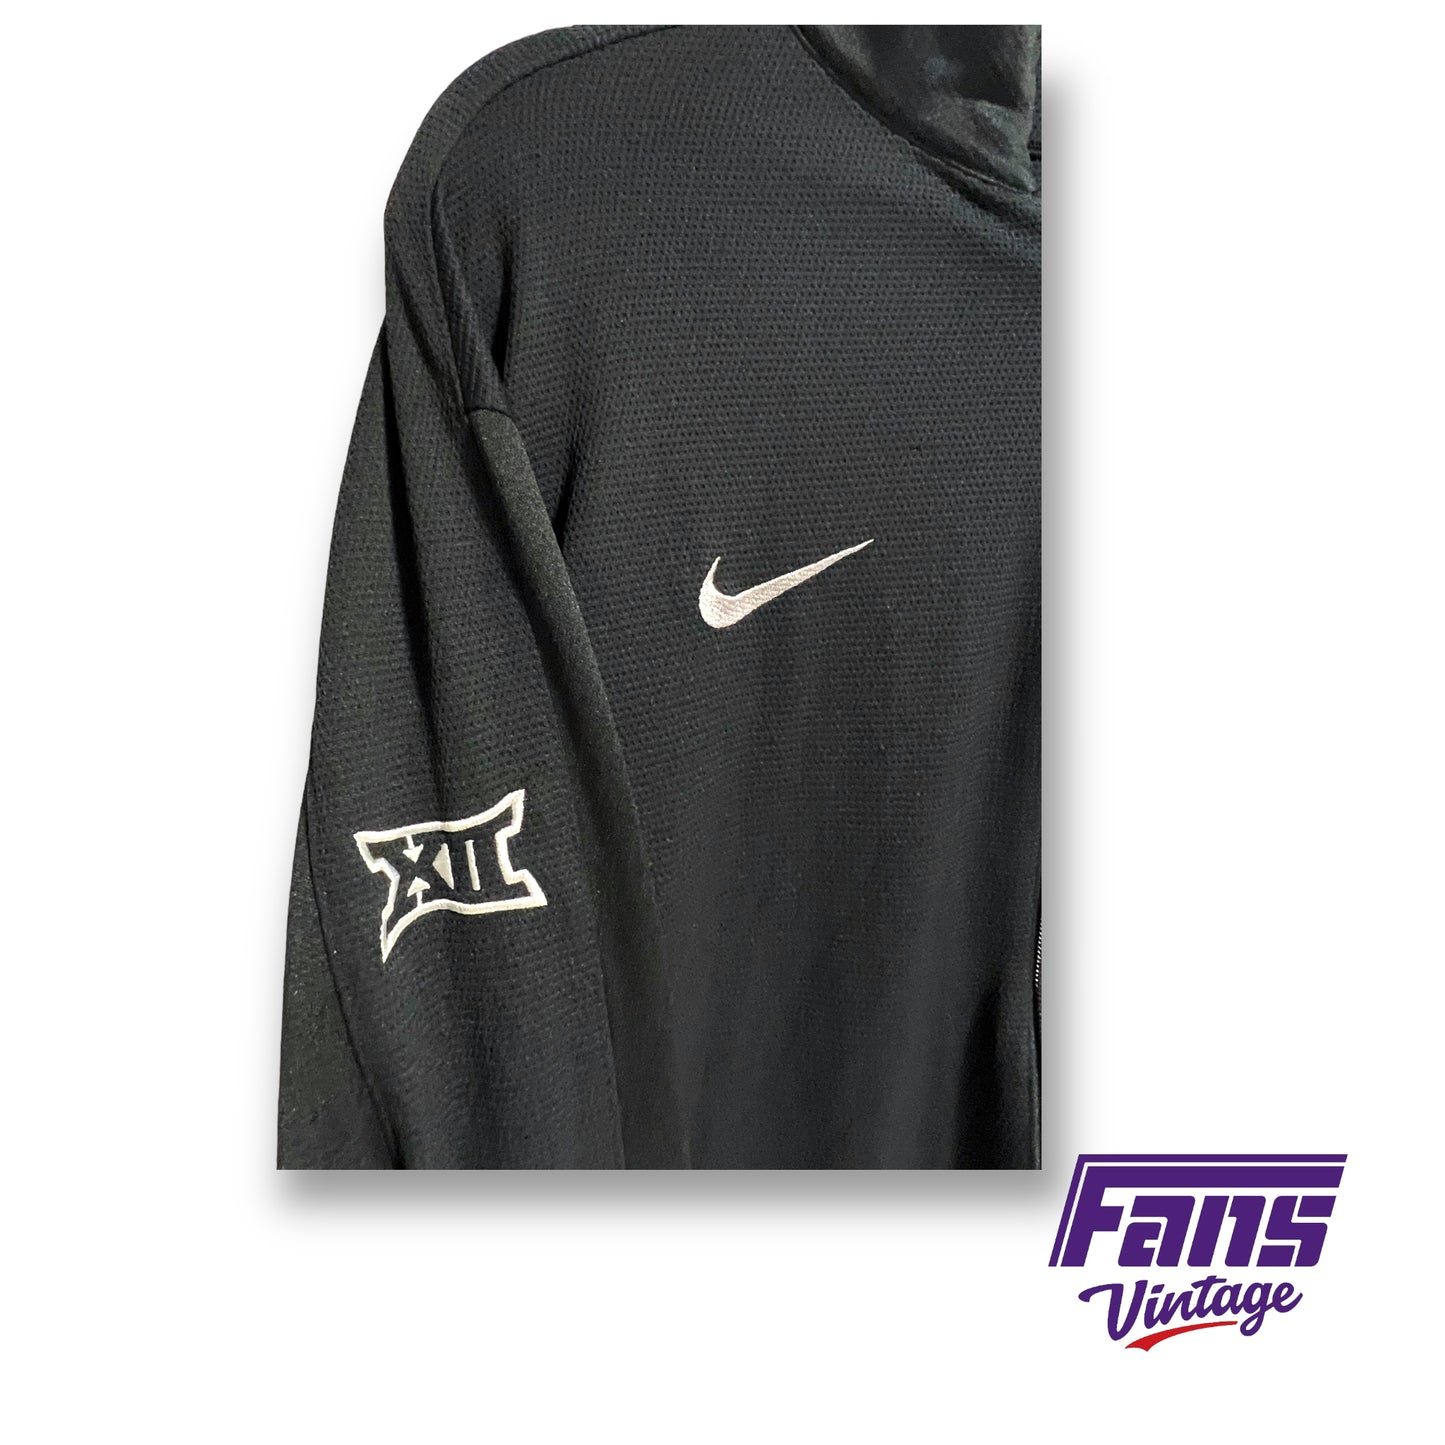 Nike TCU team issued dri-fit full-zip jacket